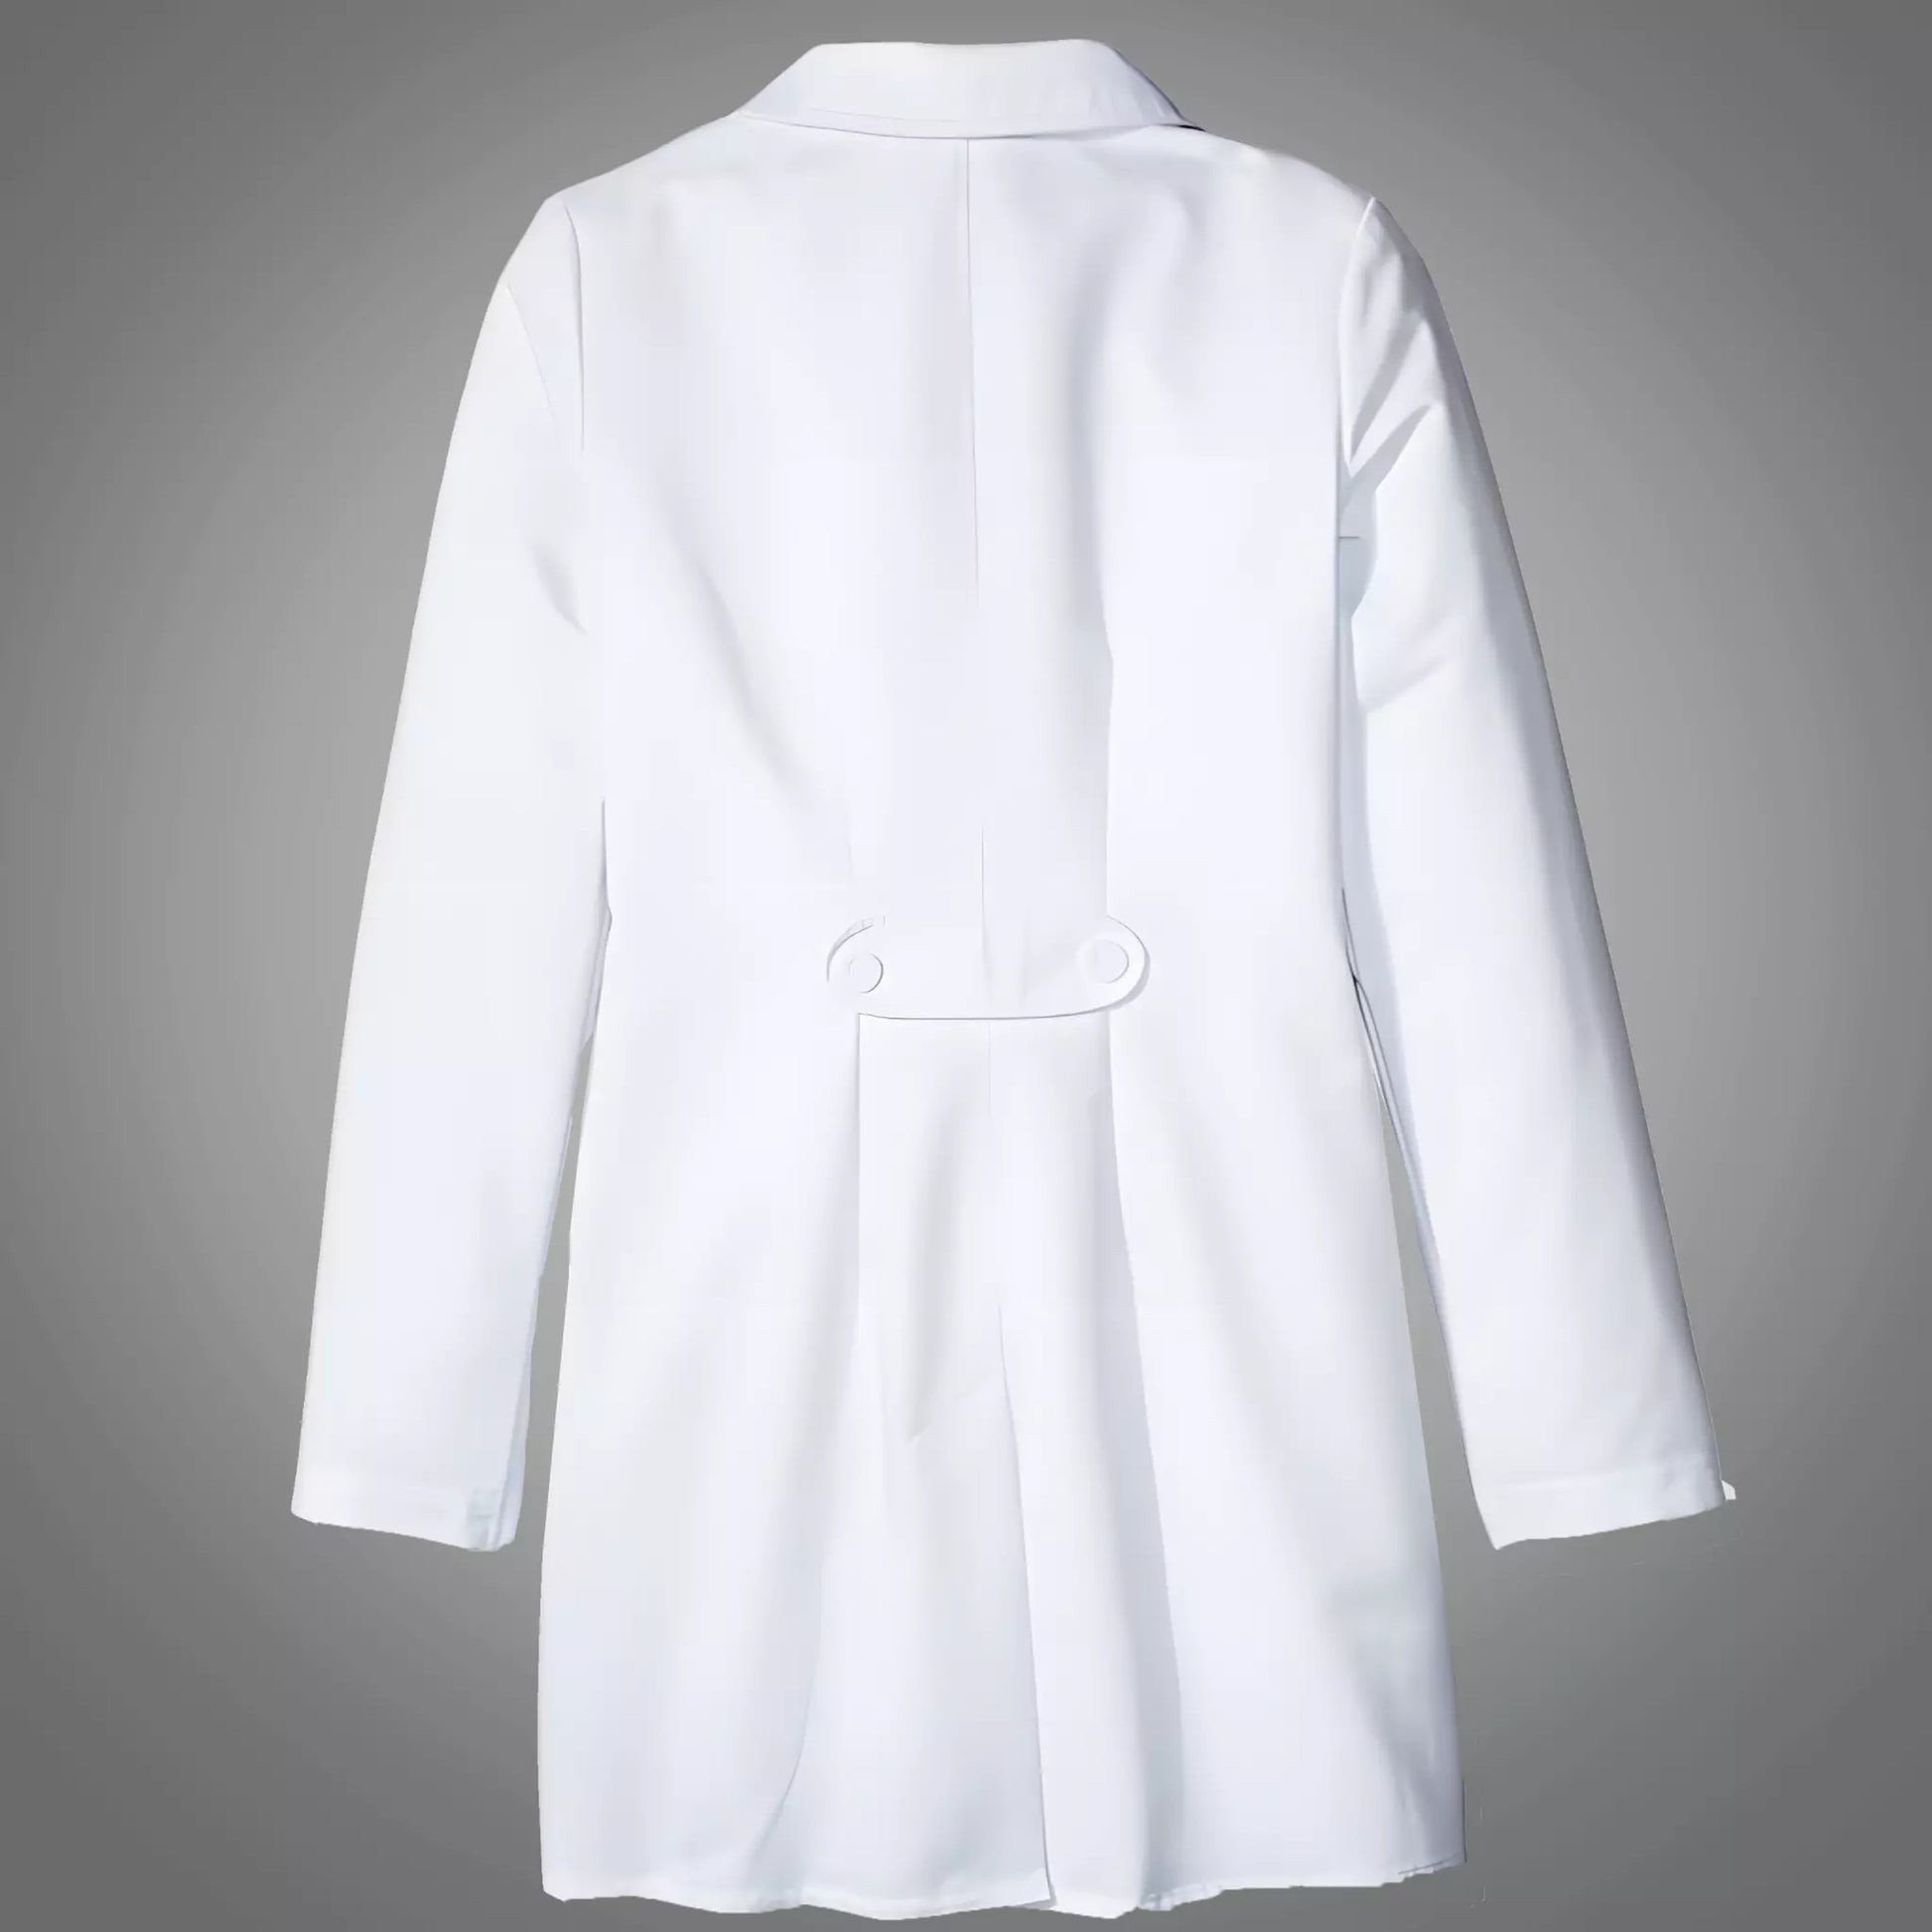 Grey's Anatomy 32" Women's Lab coat 7446 - scrubn